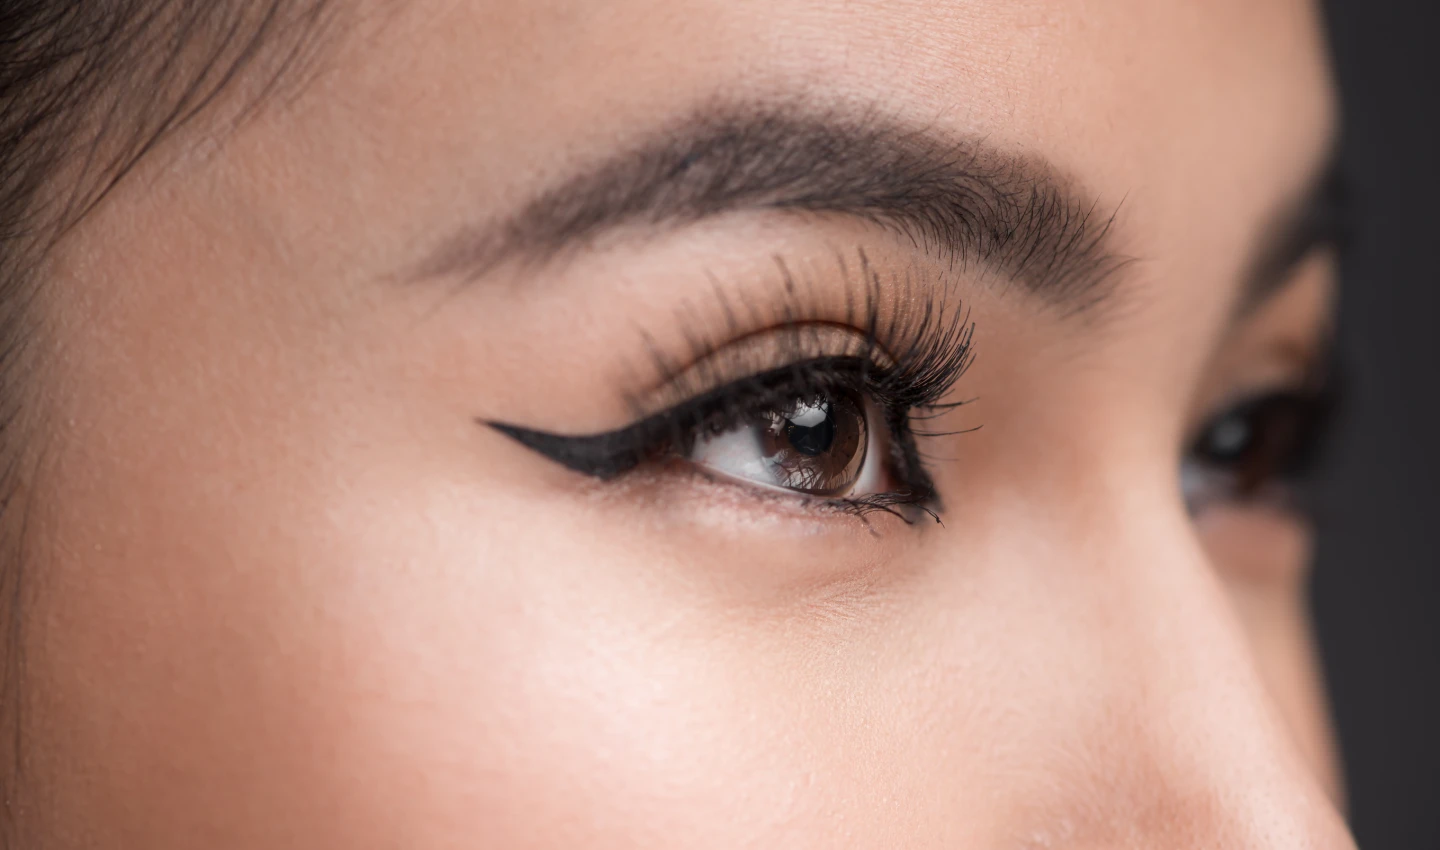 Winged Eyeline: Close-up of a mesmerizing eye with perfectly applied winged eyeliner